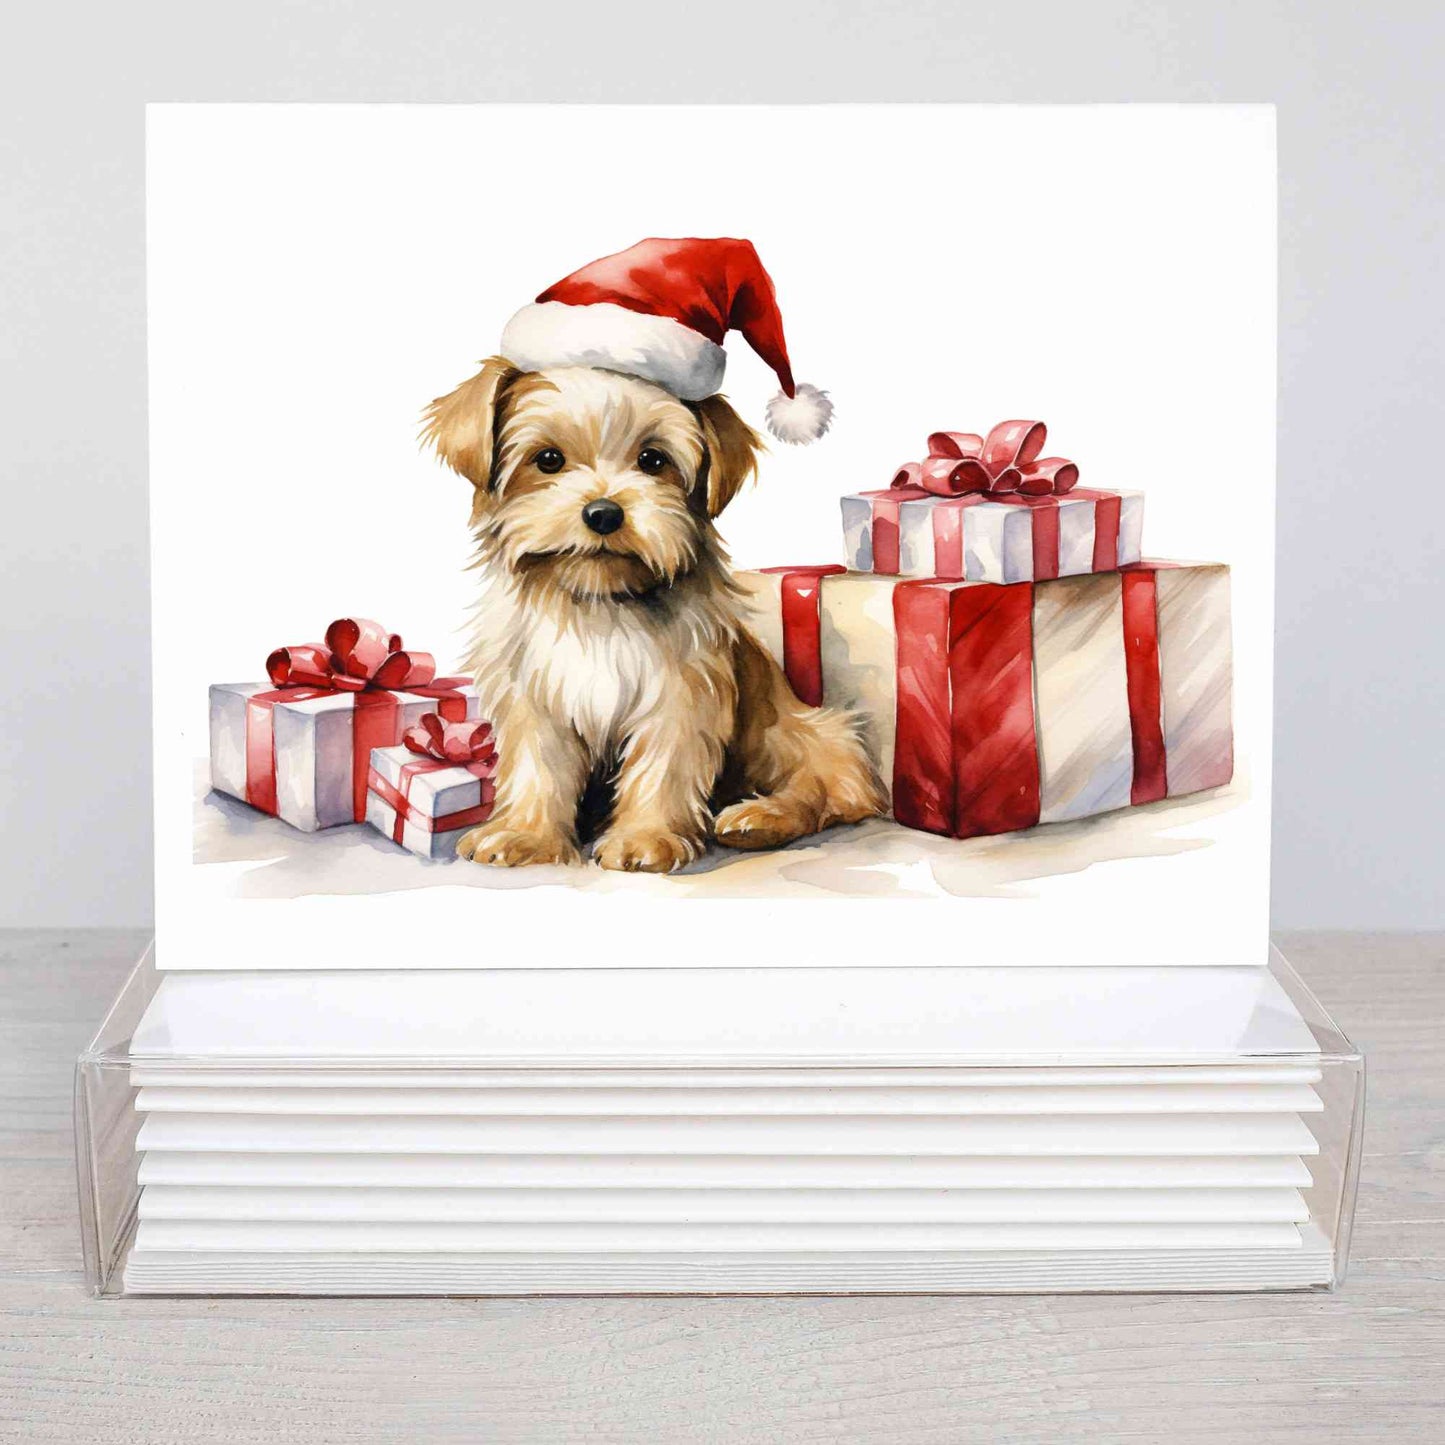 0260 - Dog and Presents Christmas Card - Greeting Card